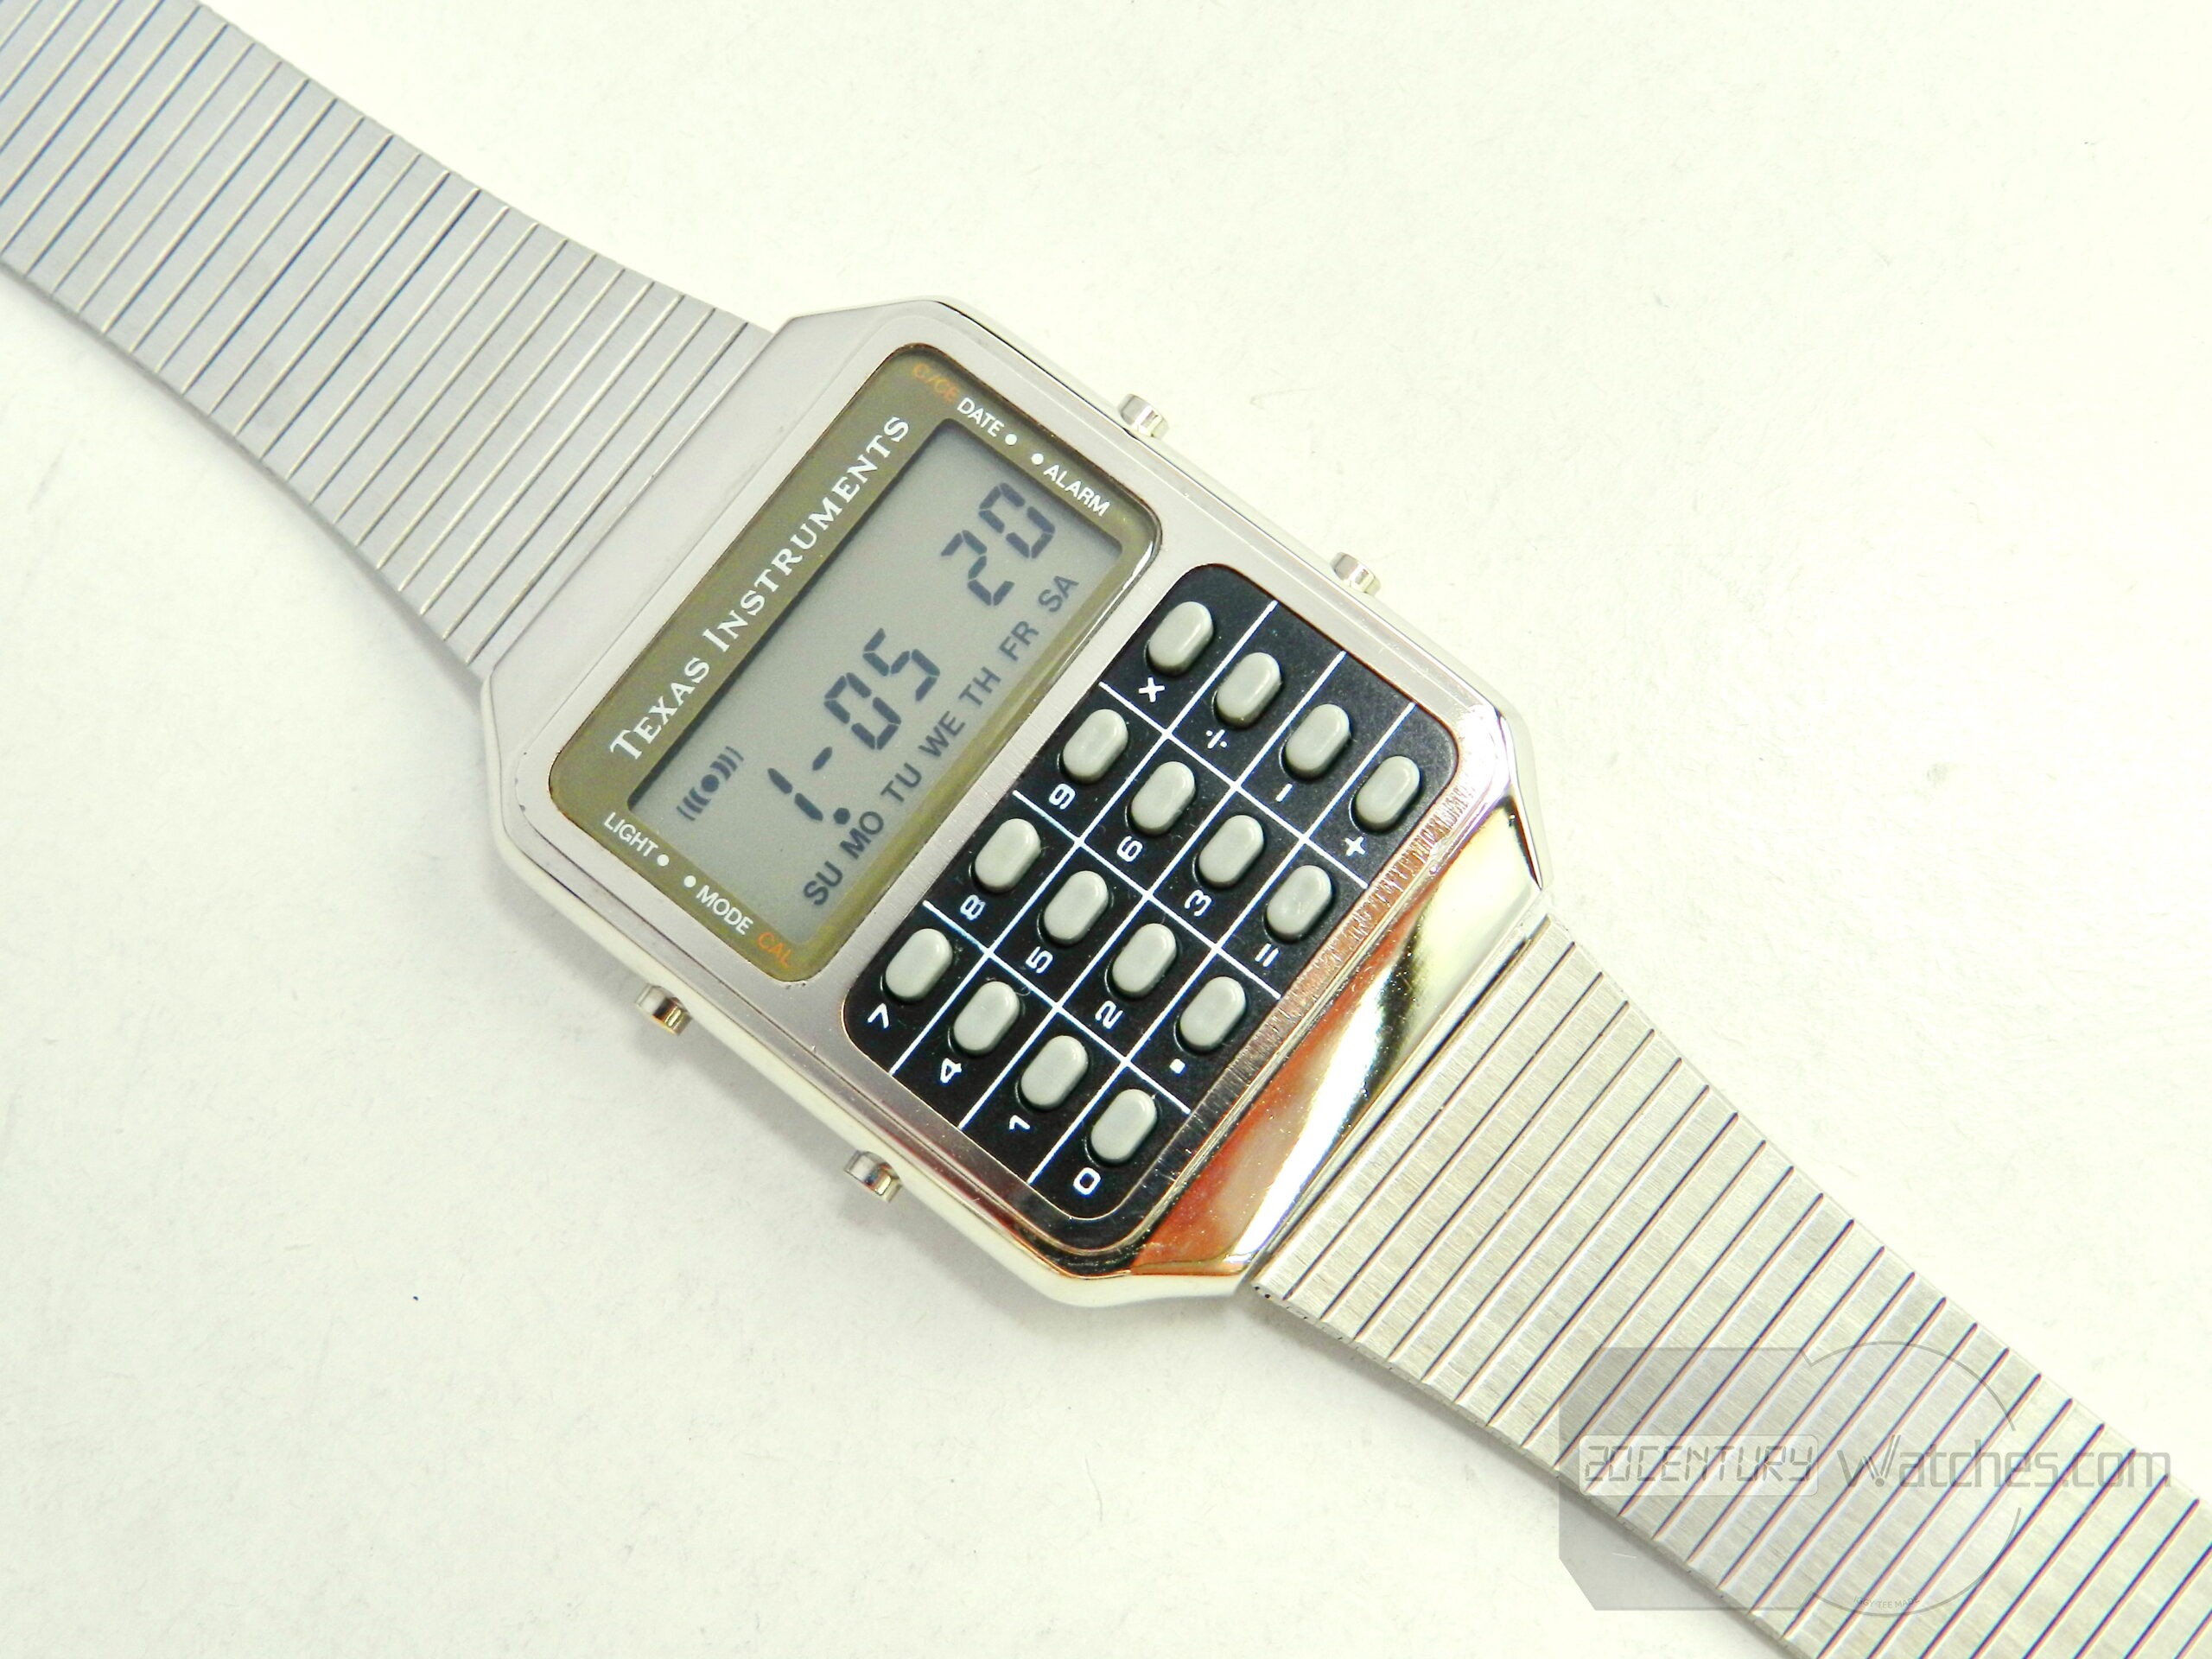 Texas Instruments calculator watch